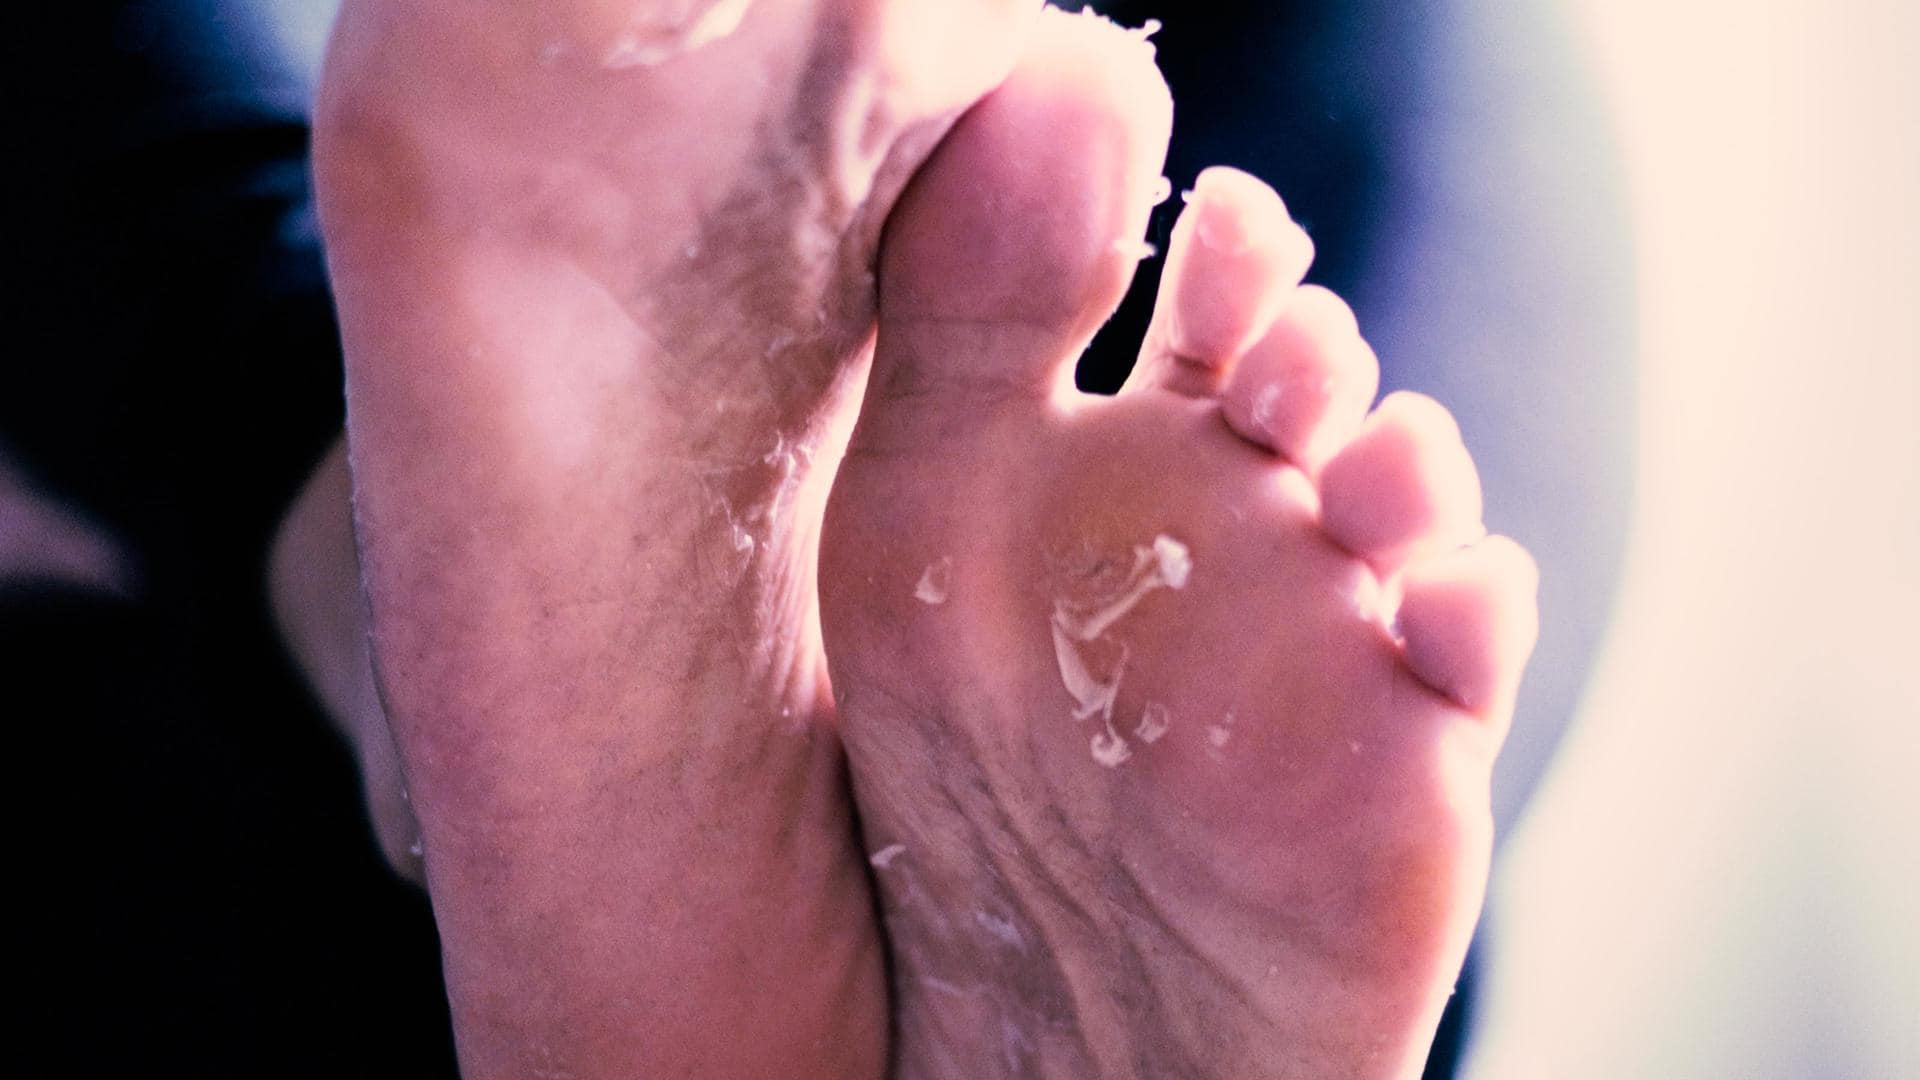 Horse Oil Feet Cream Heel Cream For Athlete's Foot Itch Cream Mask Feet  X6T1 | eBay